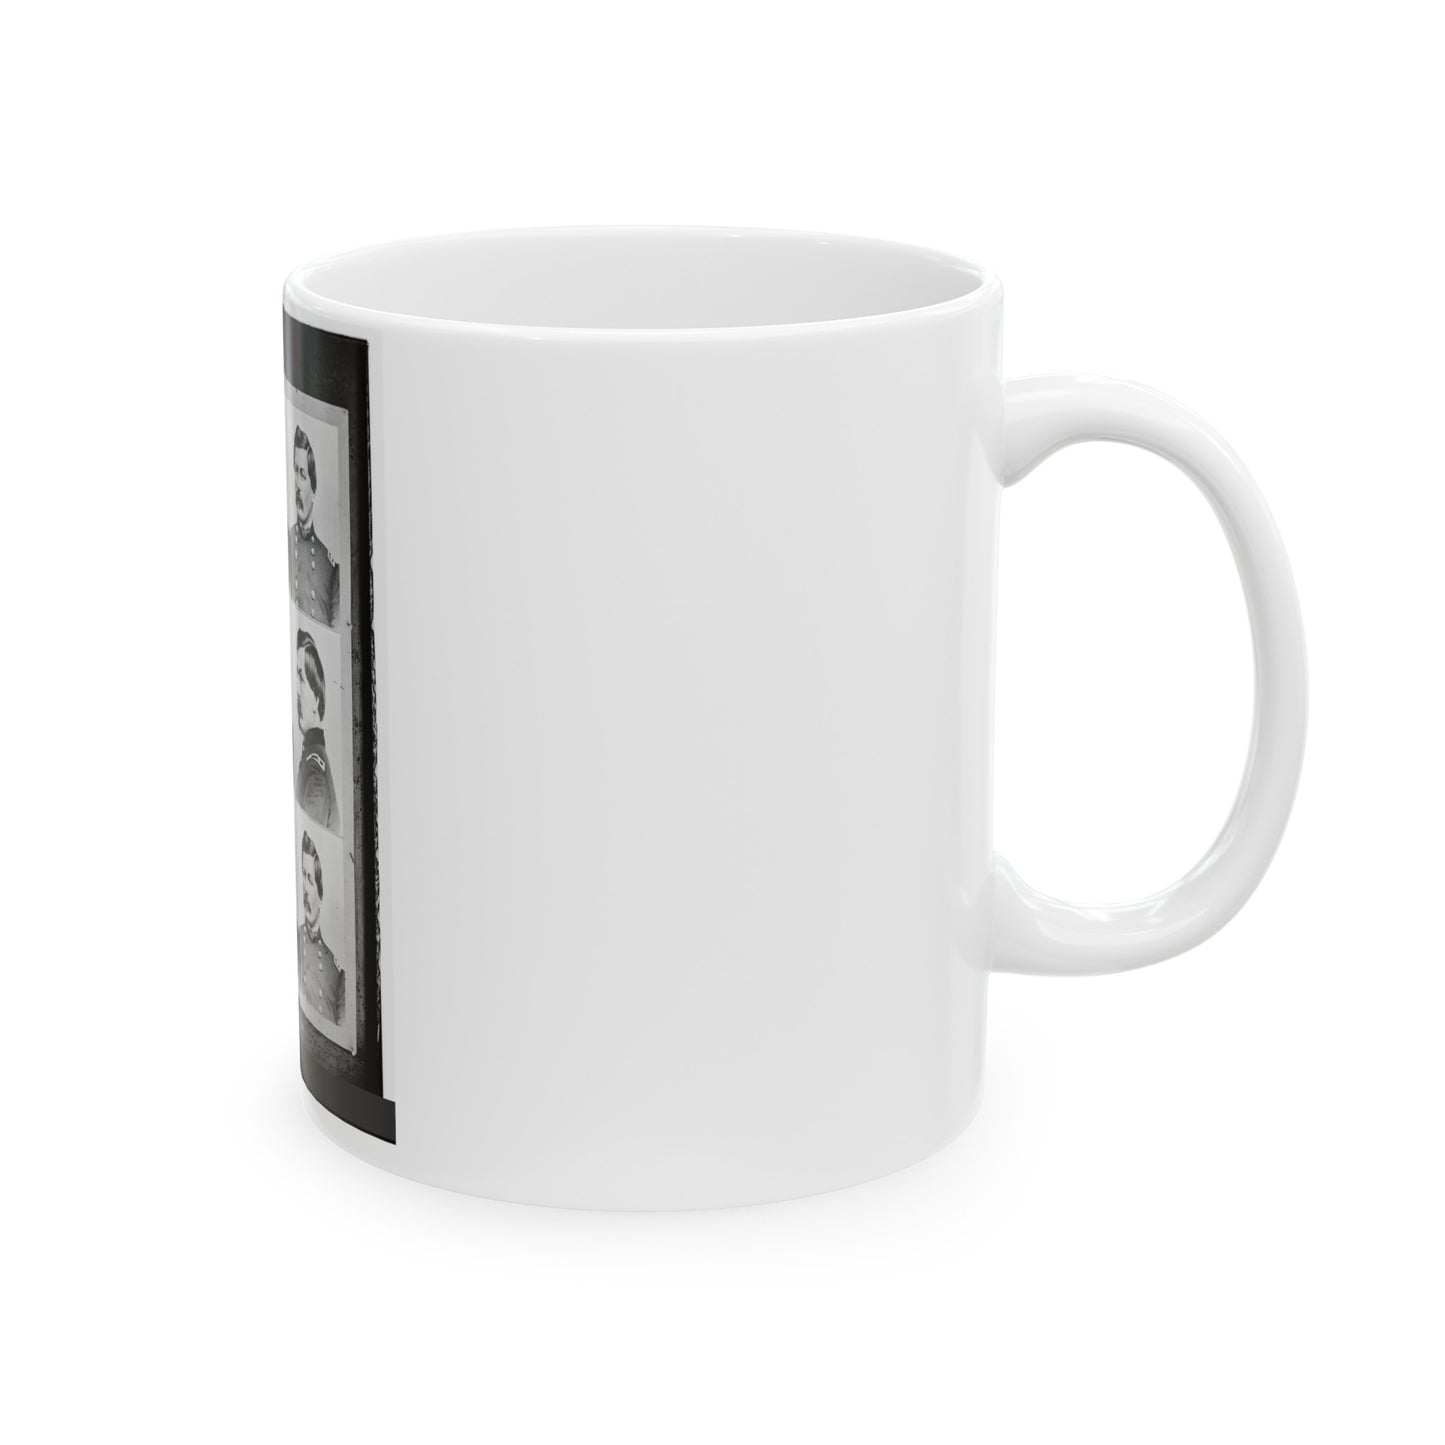 George B. Mcclellan 007 (U.S. Civil War) White Coffee Mug